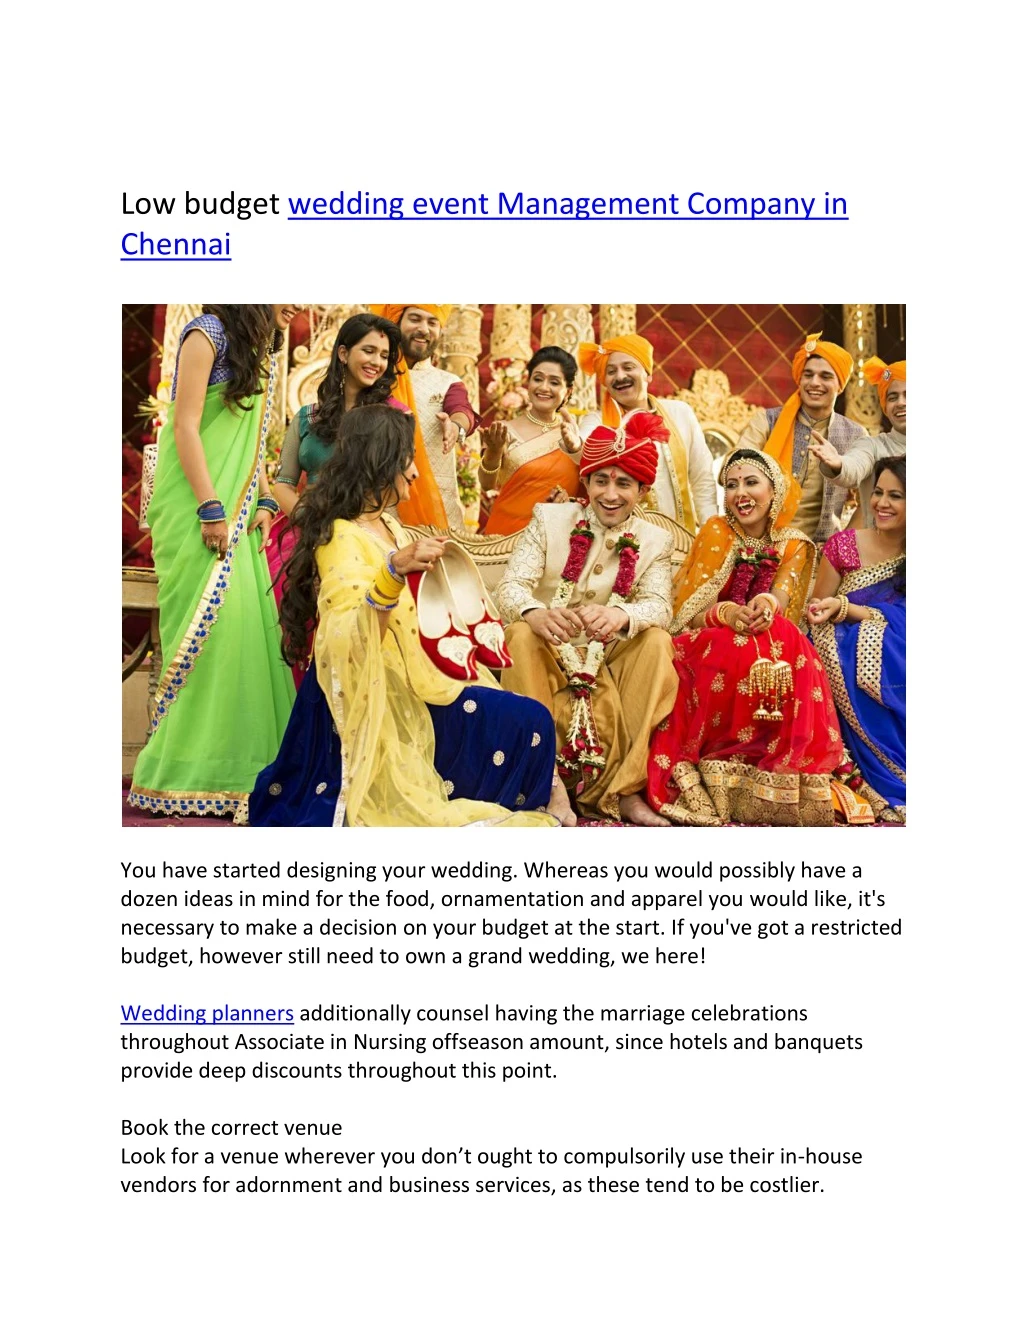 low budget wedding event management company